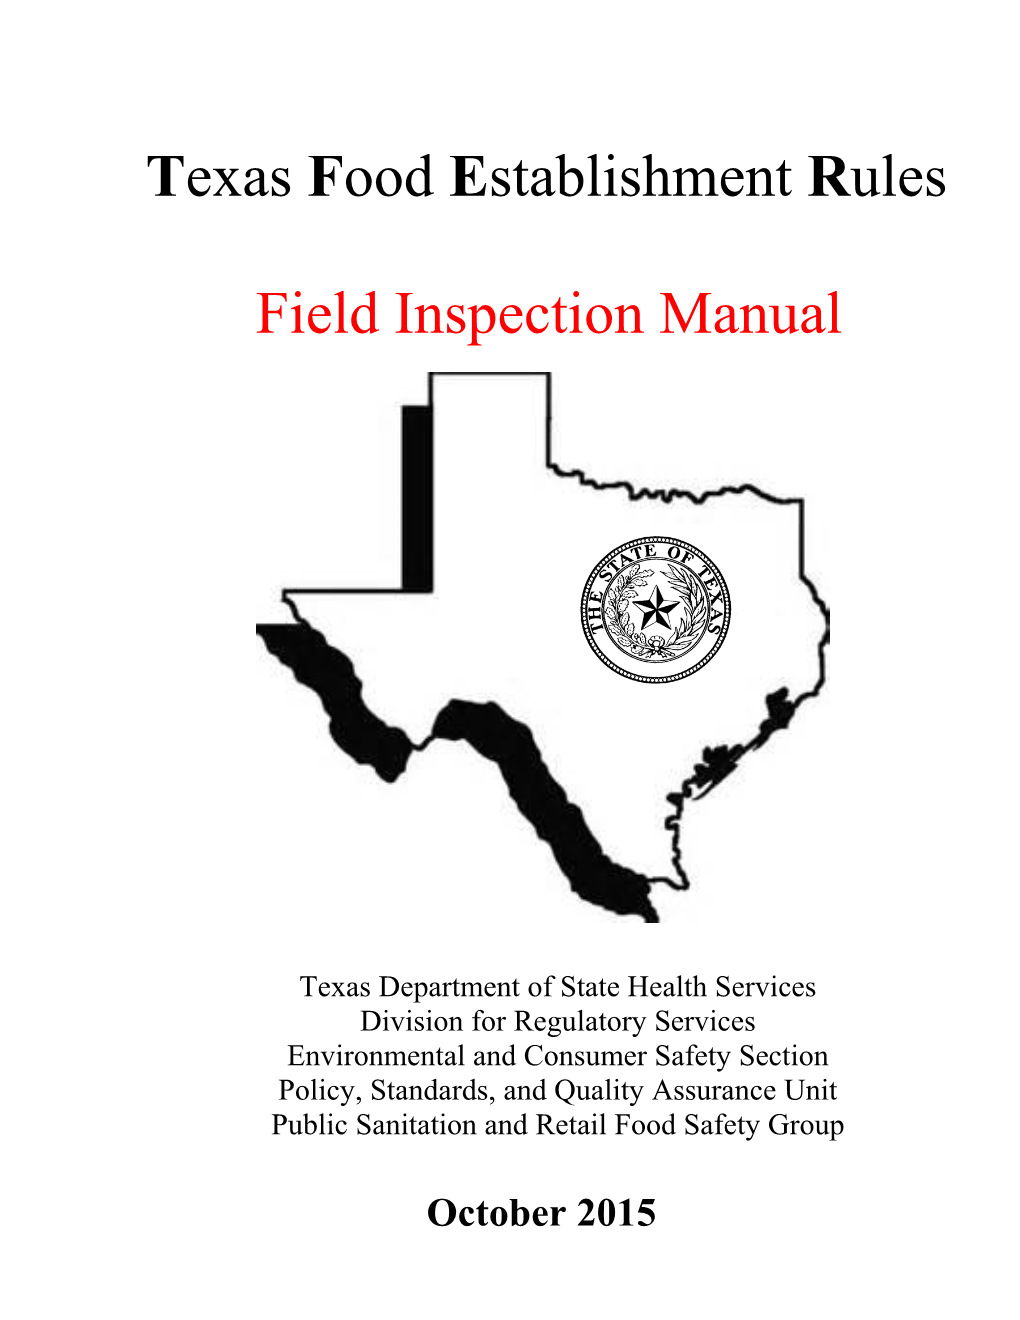 Texas Food Establishment Rules Field Inspection Manual DocsLib